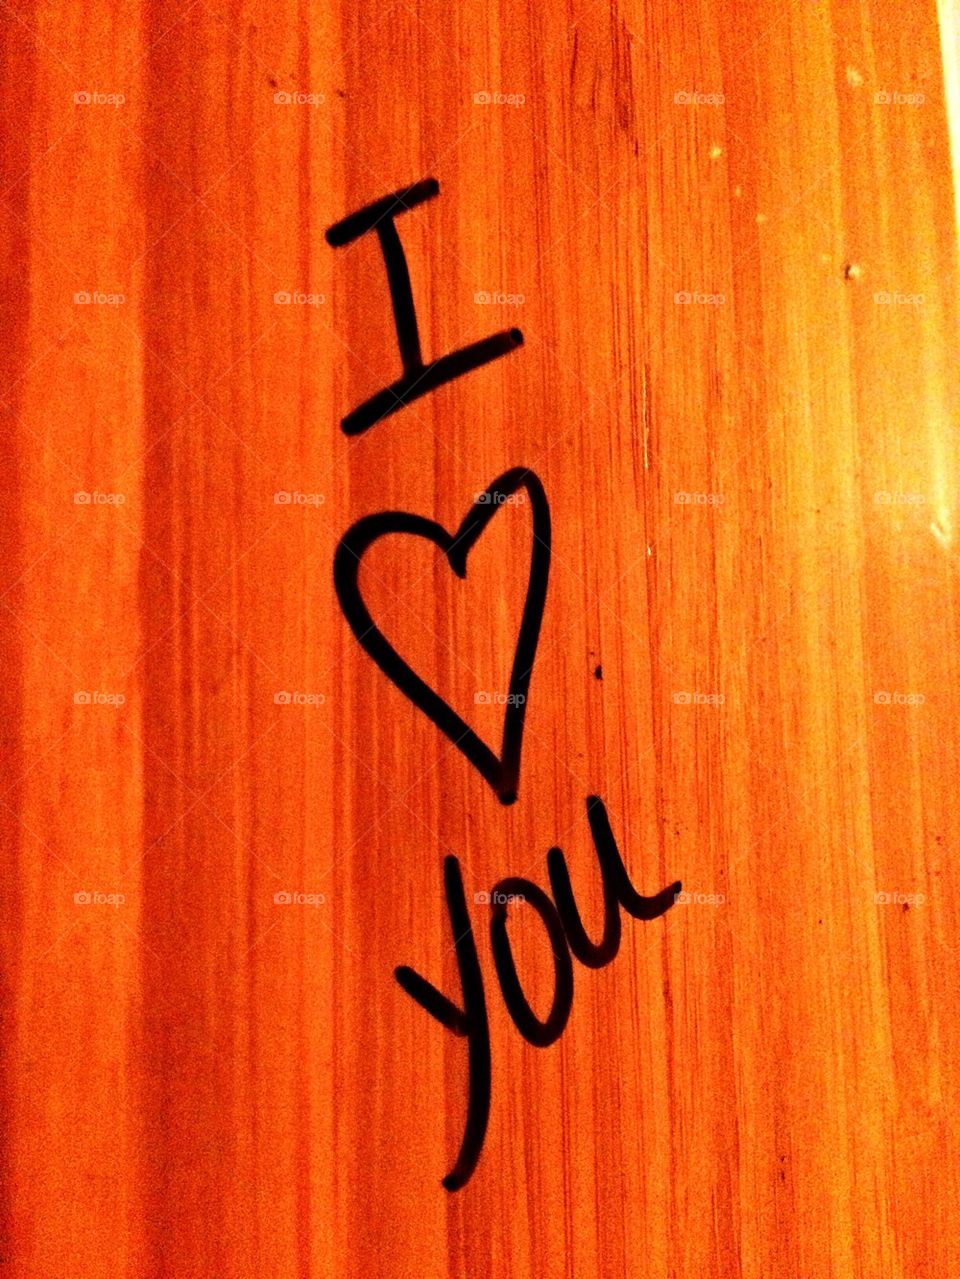 I love you on wood